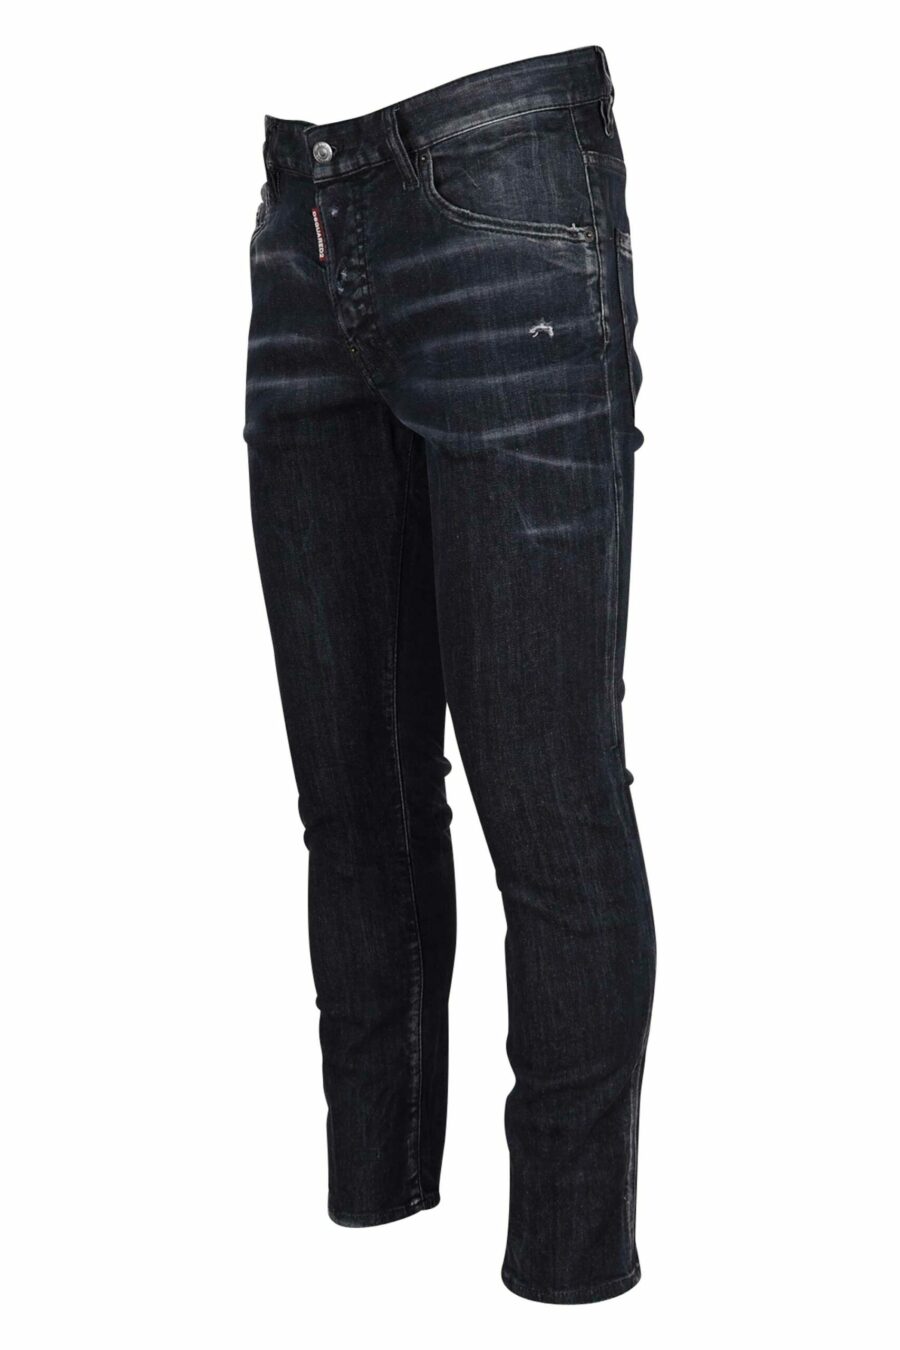 Schwarze, halb getragene "Skater-Jeans" - 8054148289591 1 skaliert